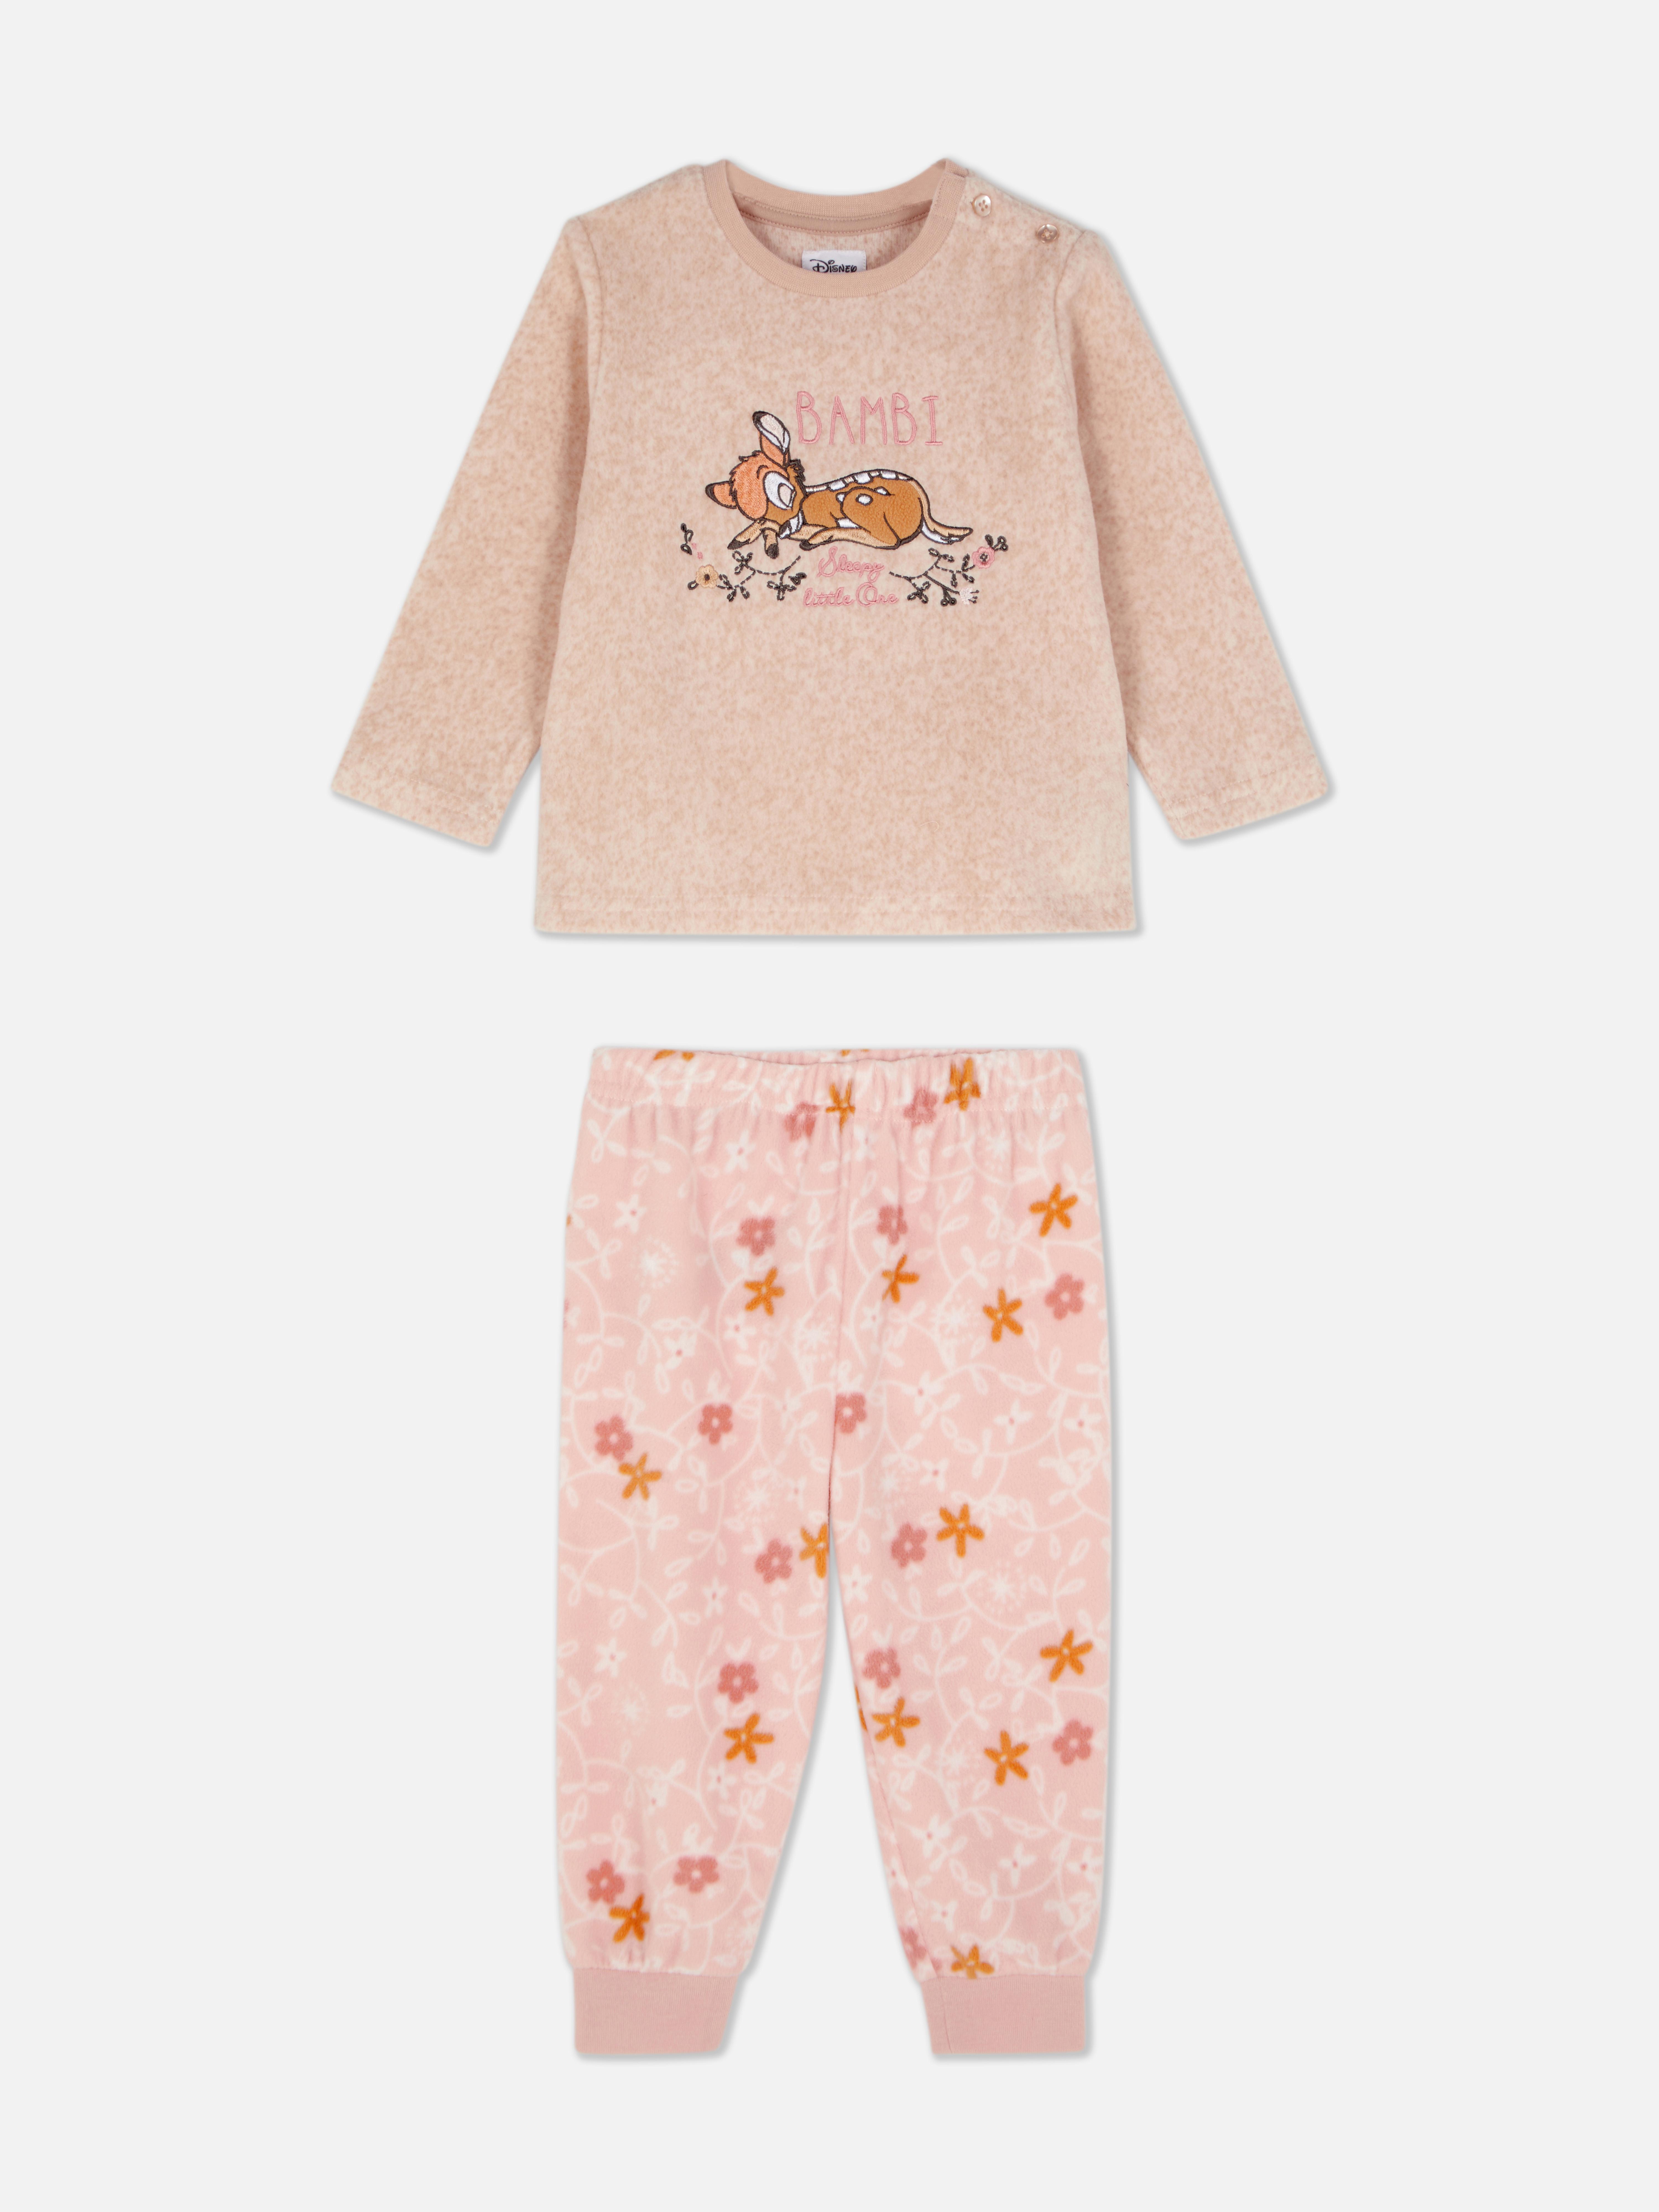 „Disney Bambi“ Schlafanzug aus Fleece